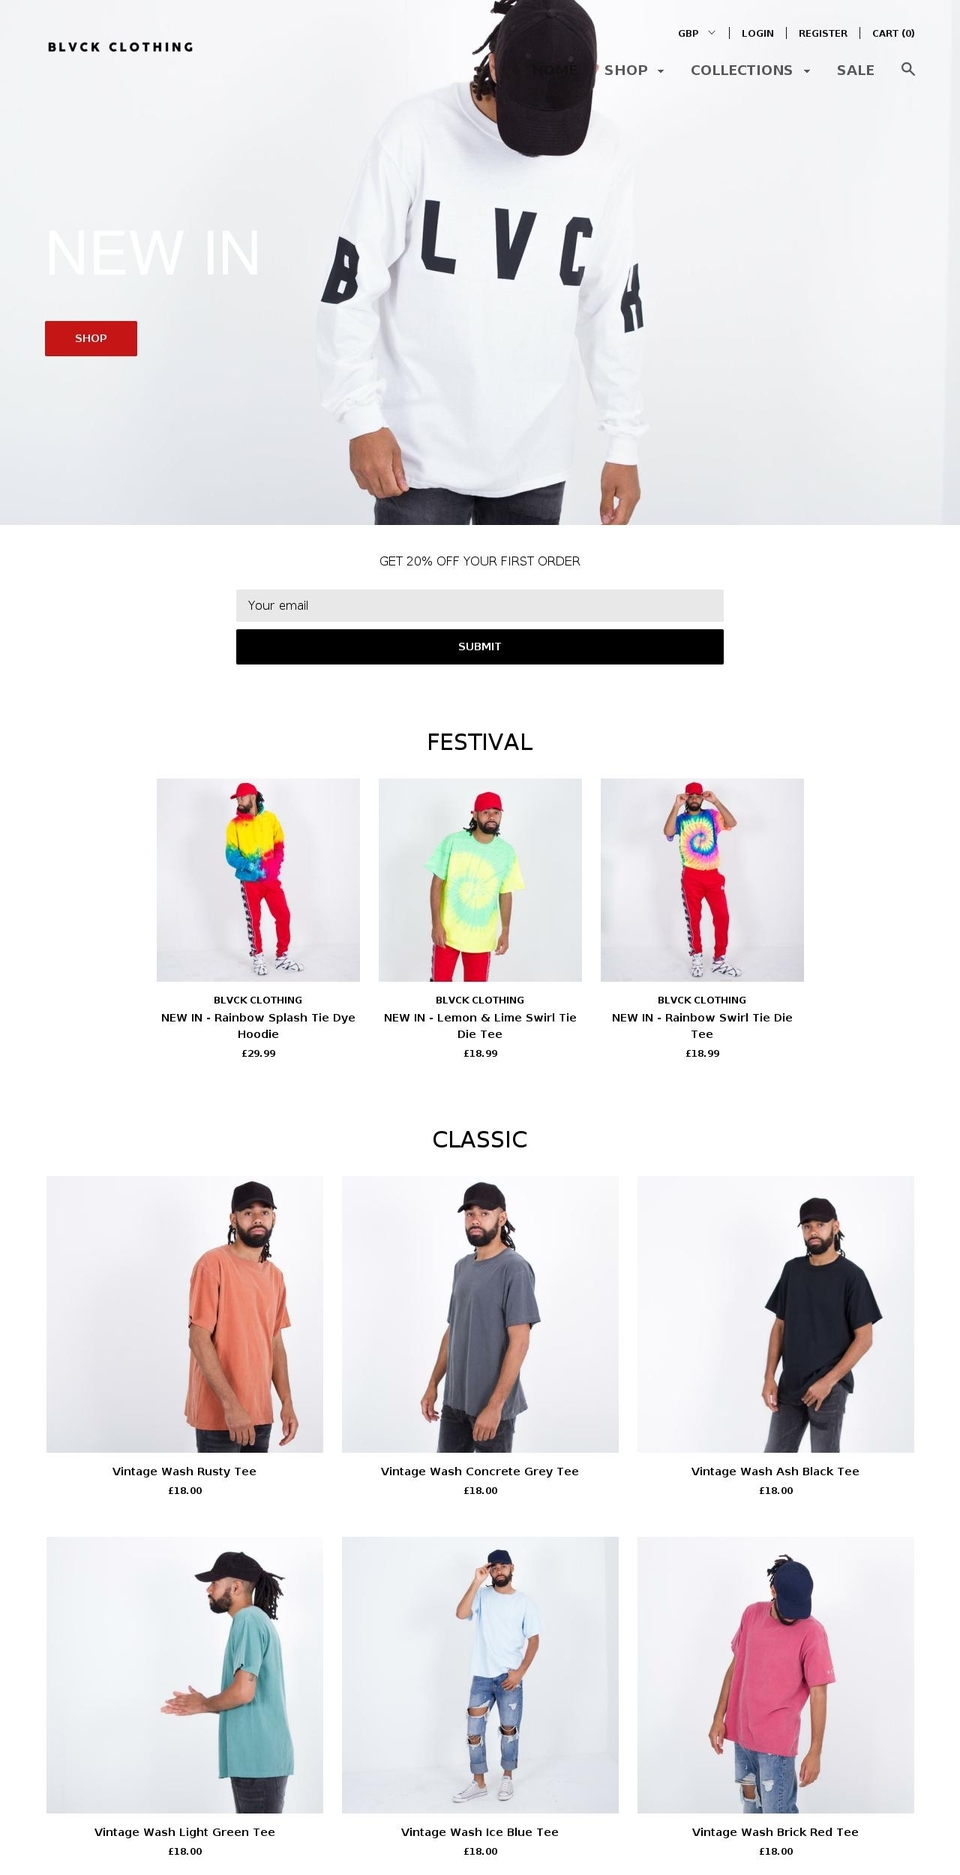 blvck.clothing shopify website screenshot